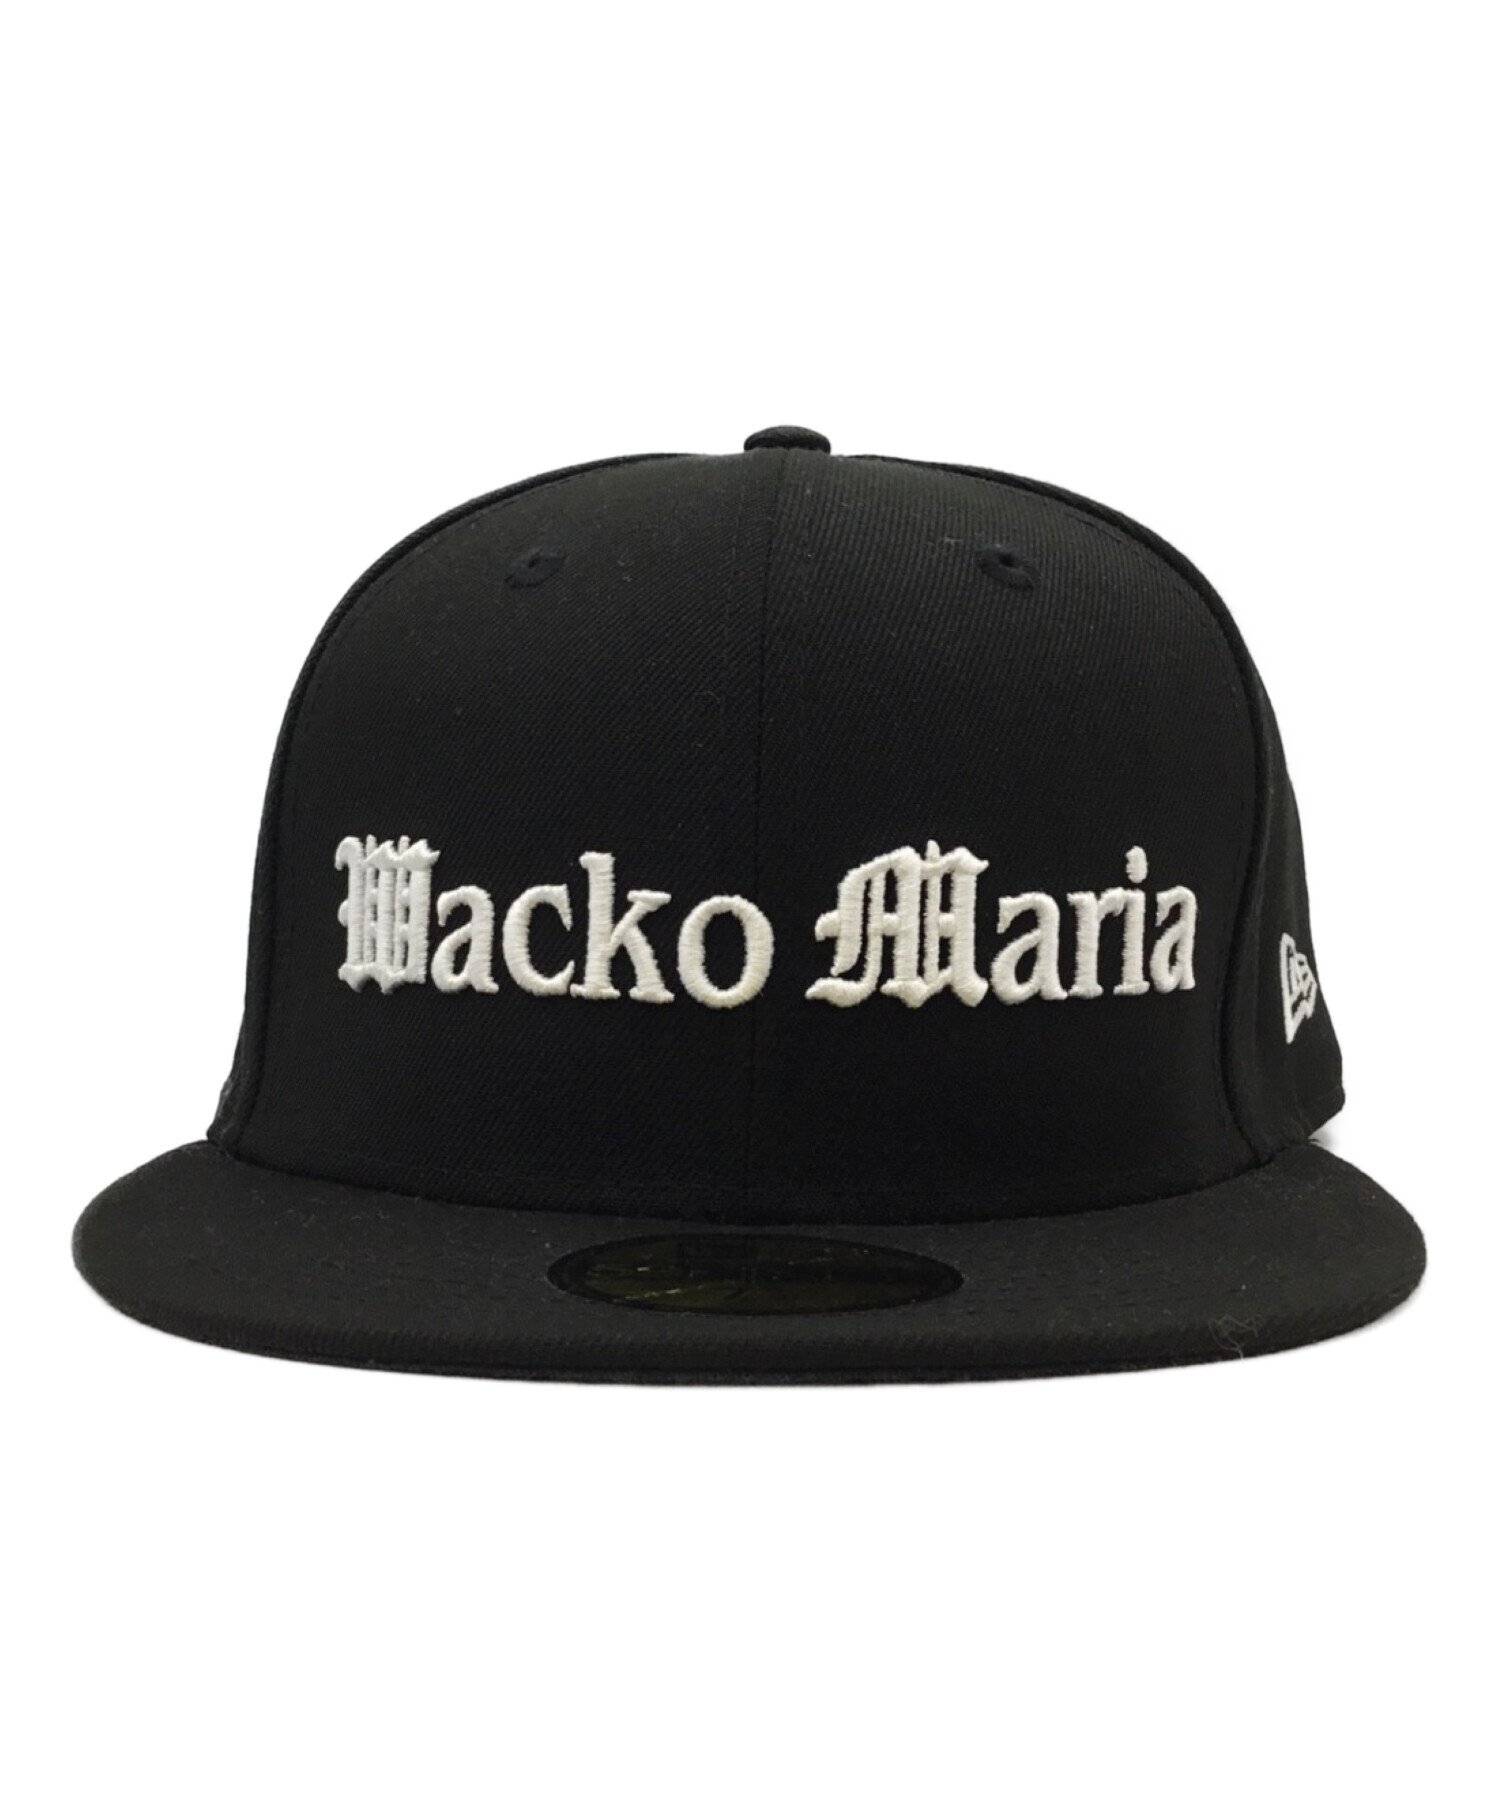 New Era (ニューエラ) WACKO MARIA (ワコマリア) キャップ ブラック サイズ:7 1/2